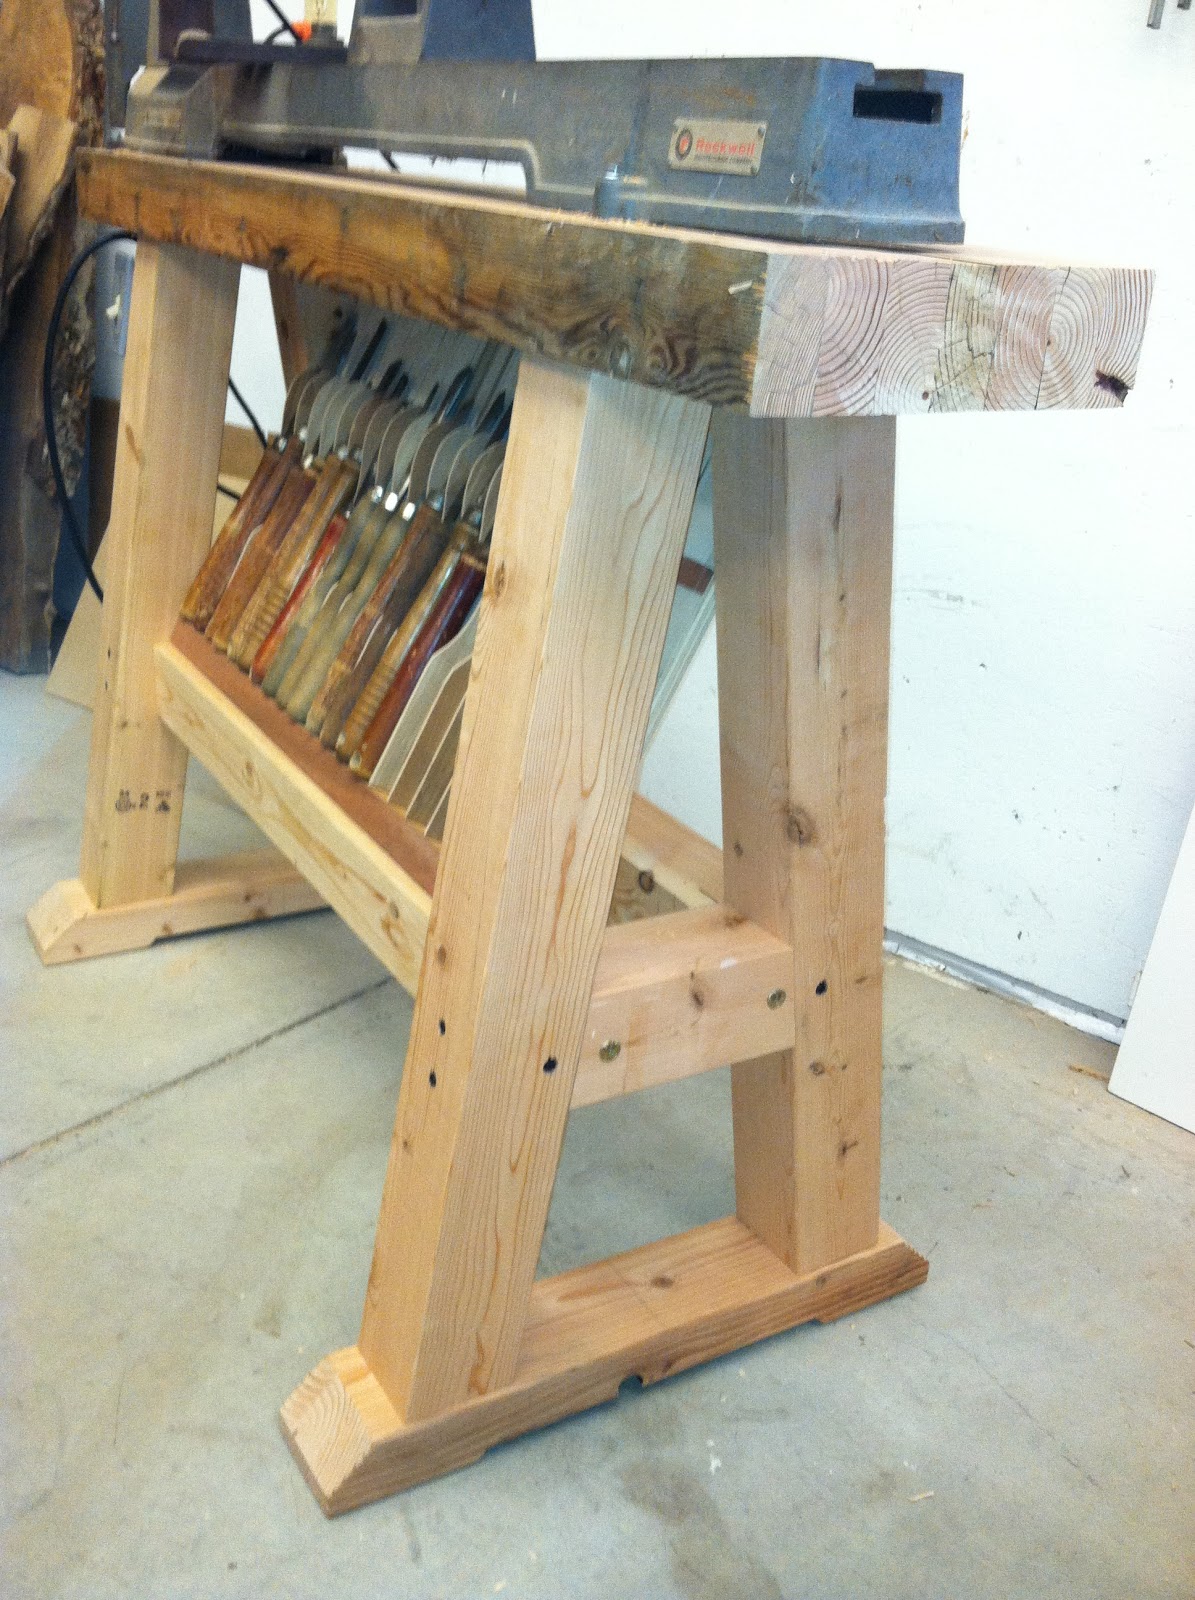 RusticWorks - Wood Working Photo Journal: Lathe Stand ...